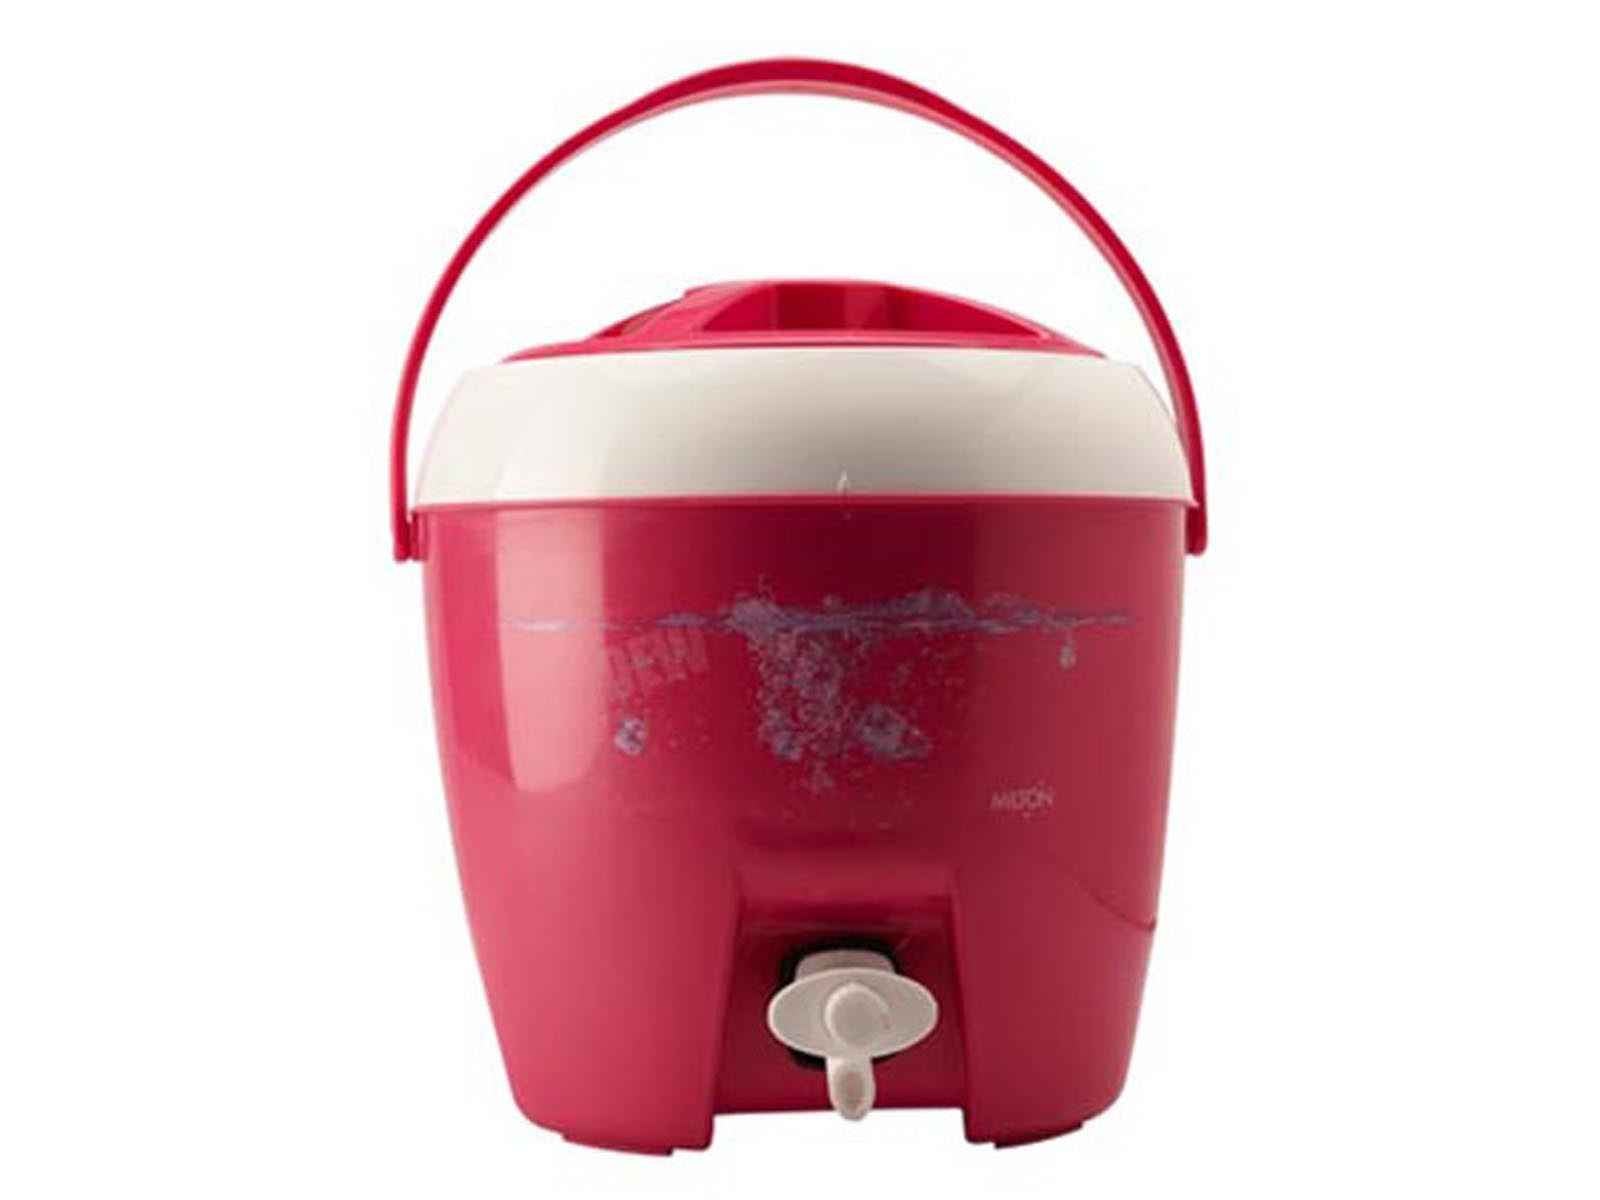 milton water heater jug